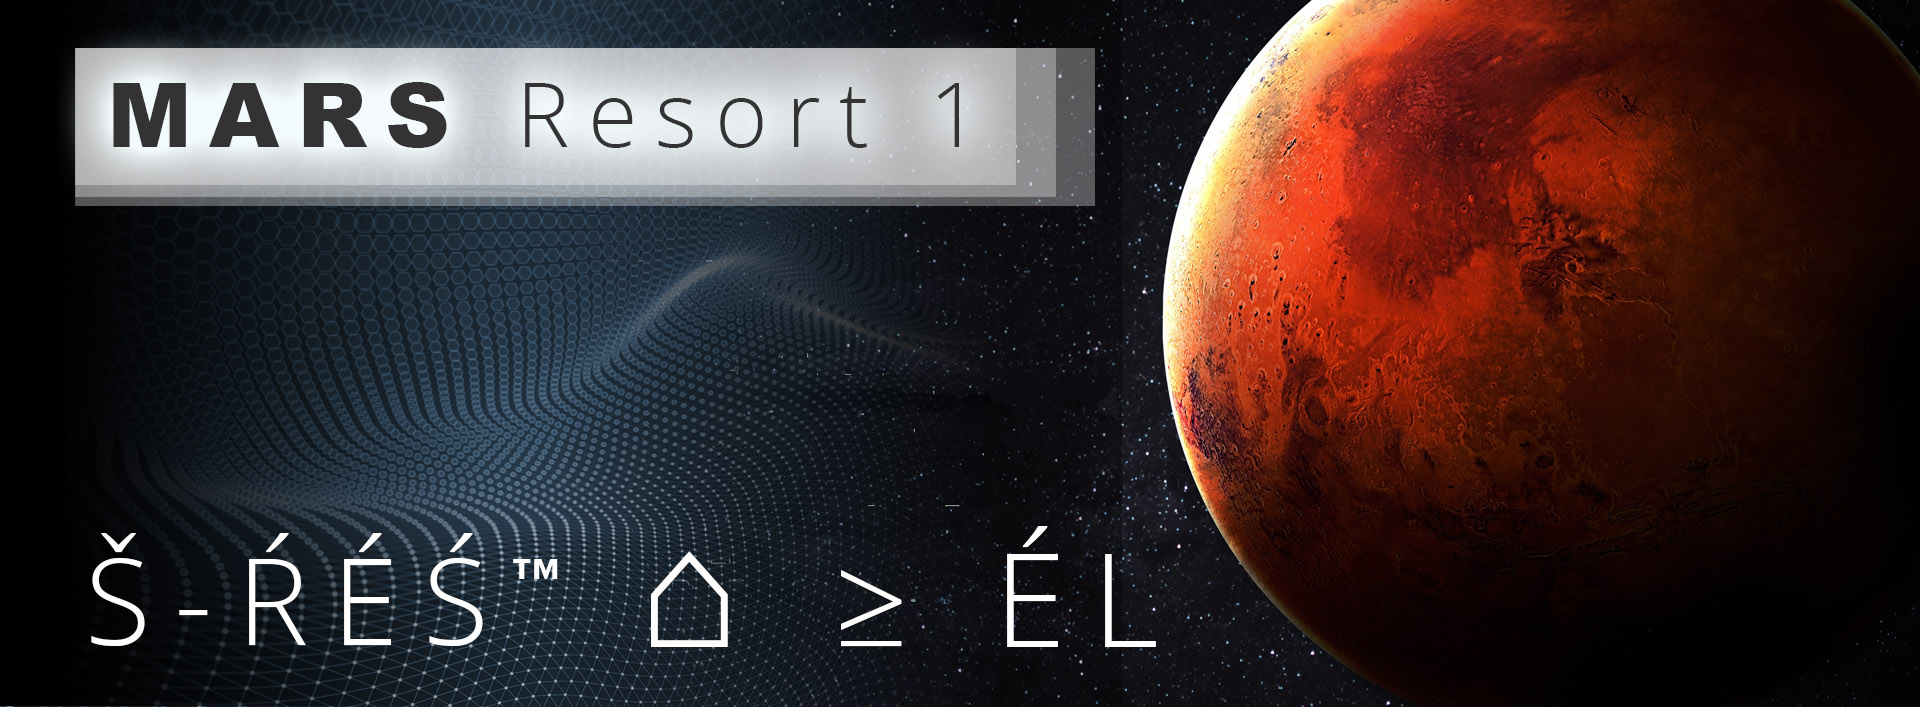 MARS-Resort-1__S-RES-and-⌂≥ÉL